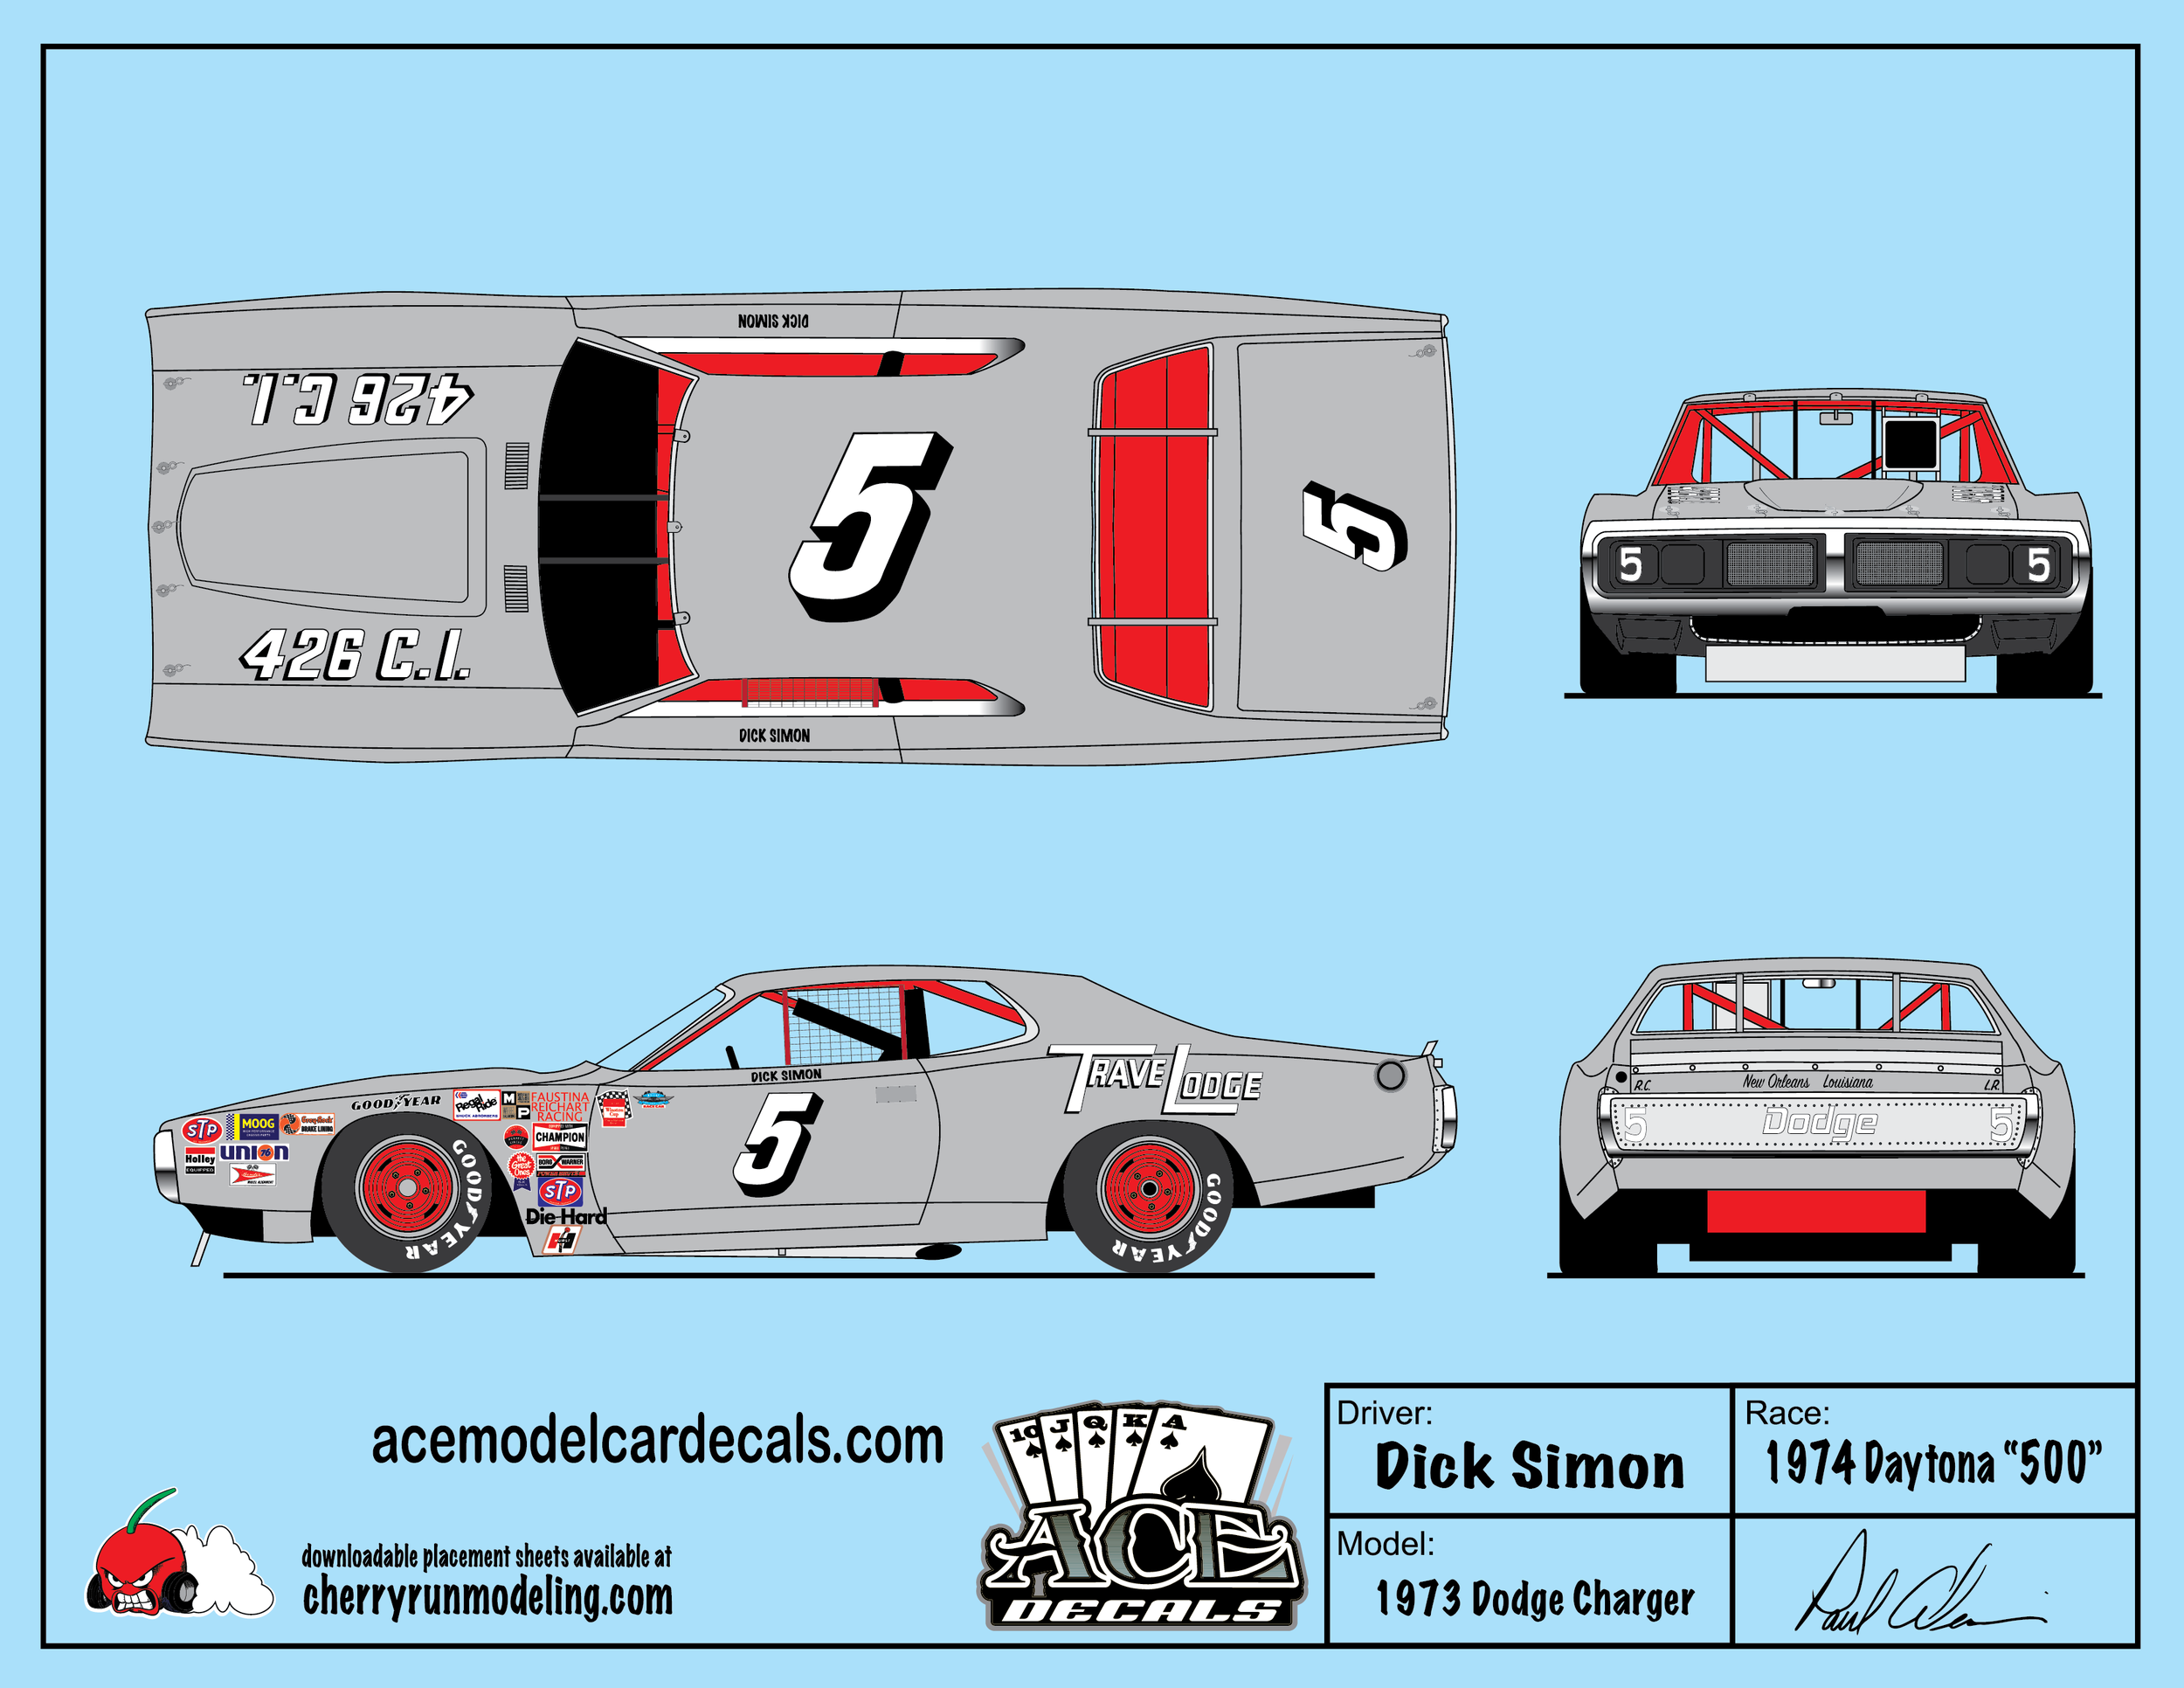 Dick Simon 1974 Daytona 500-01.png